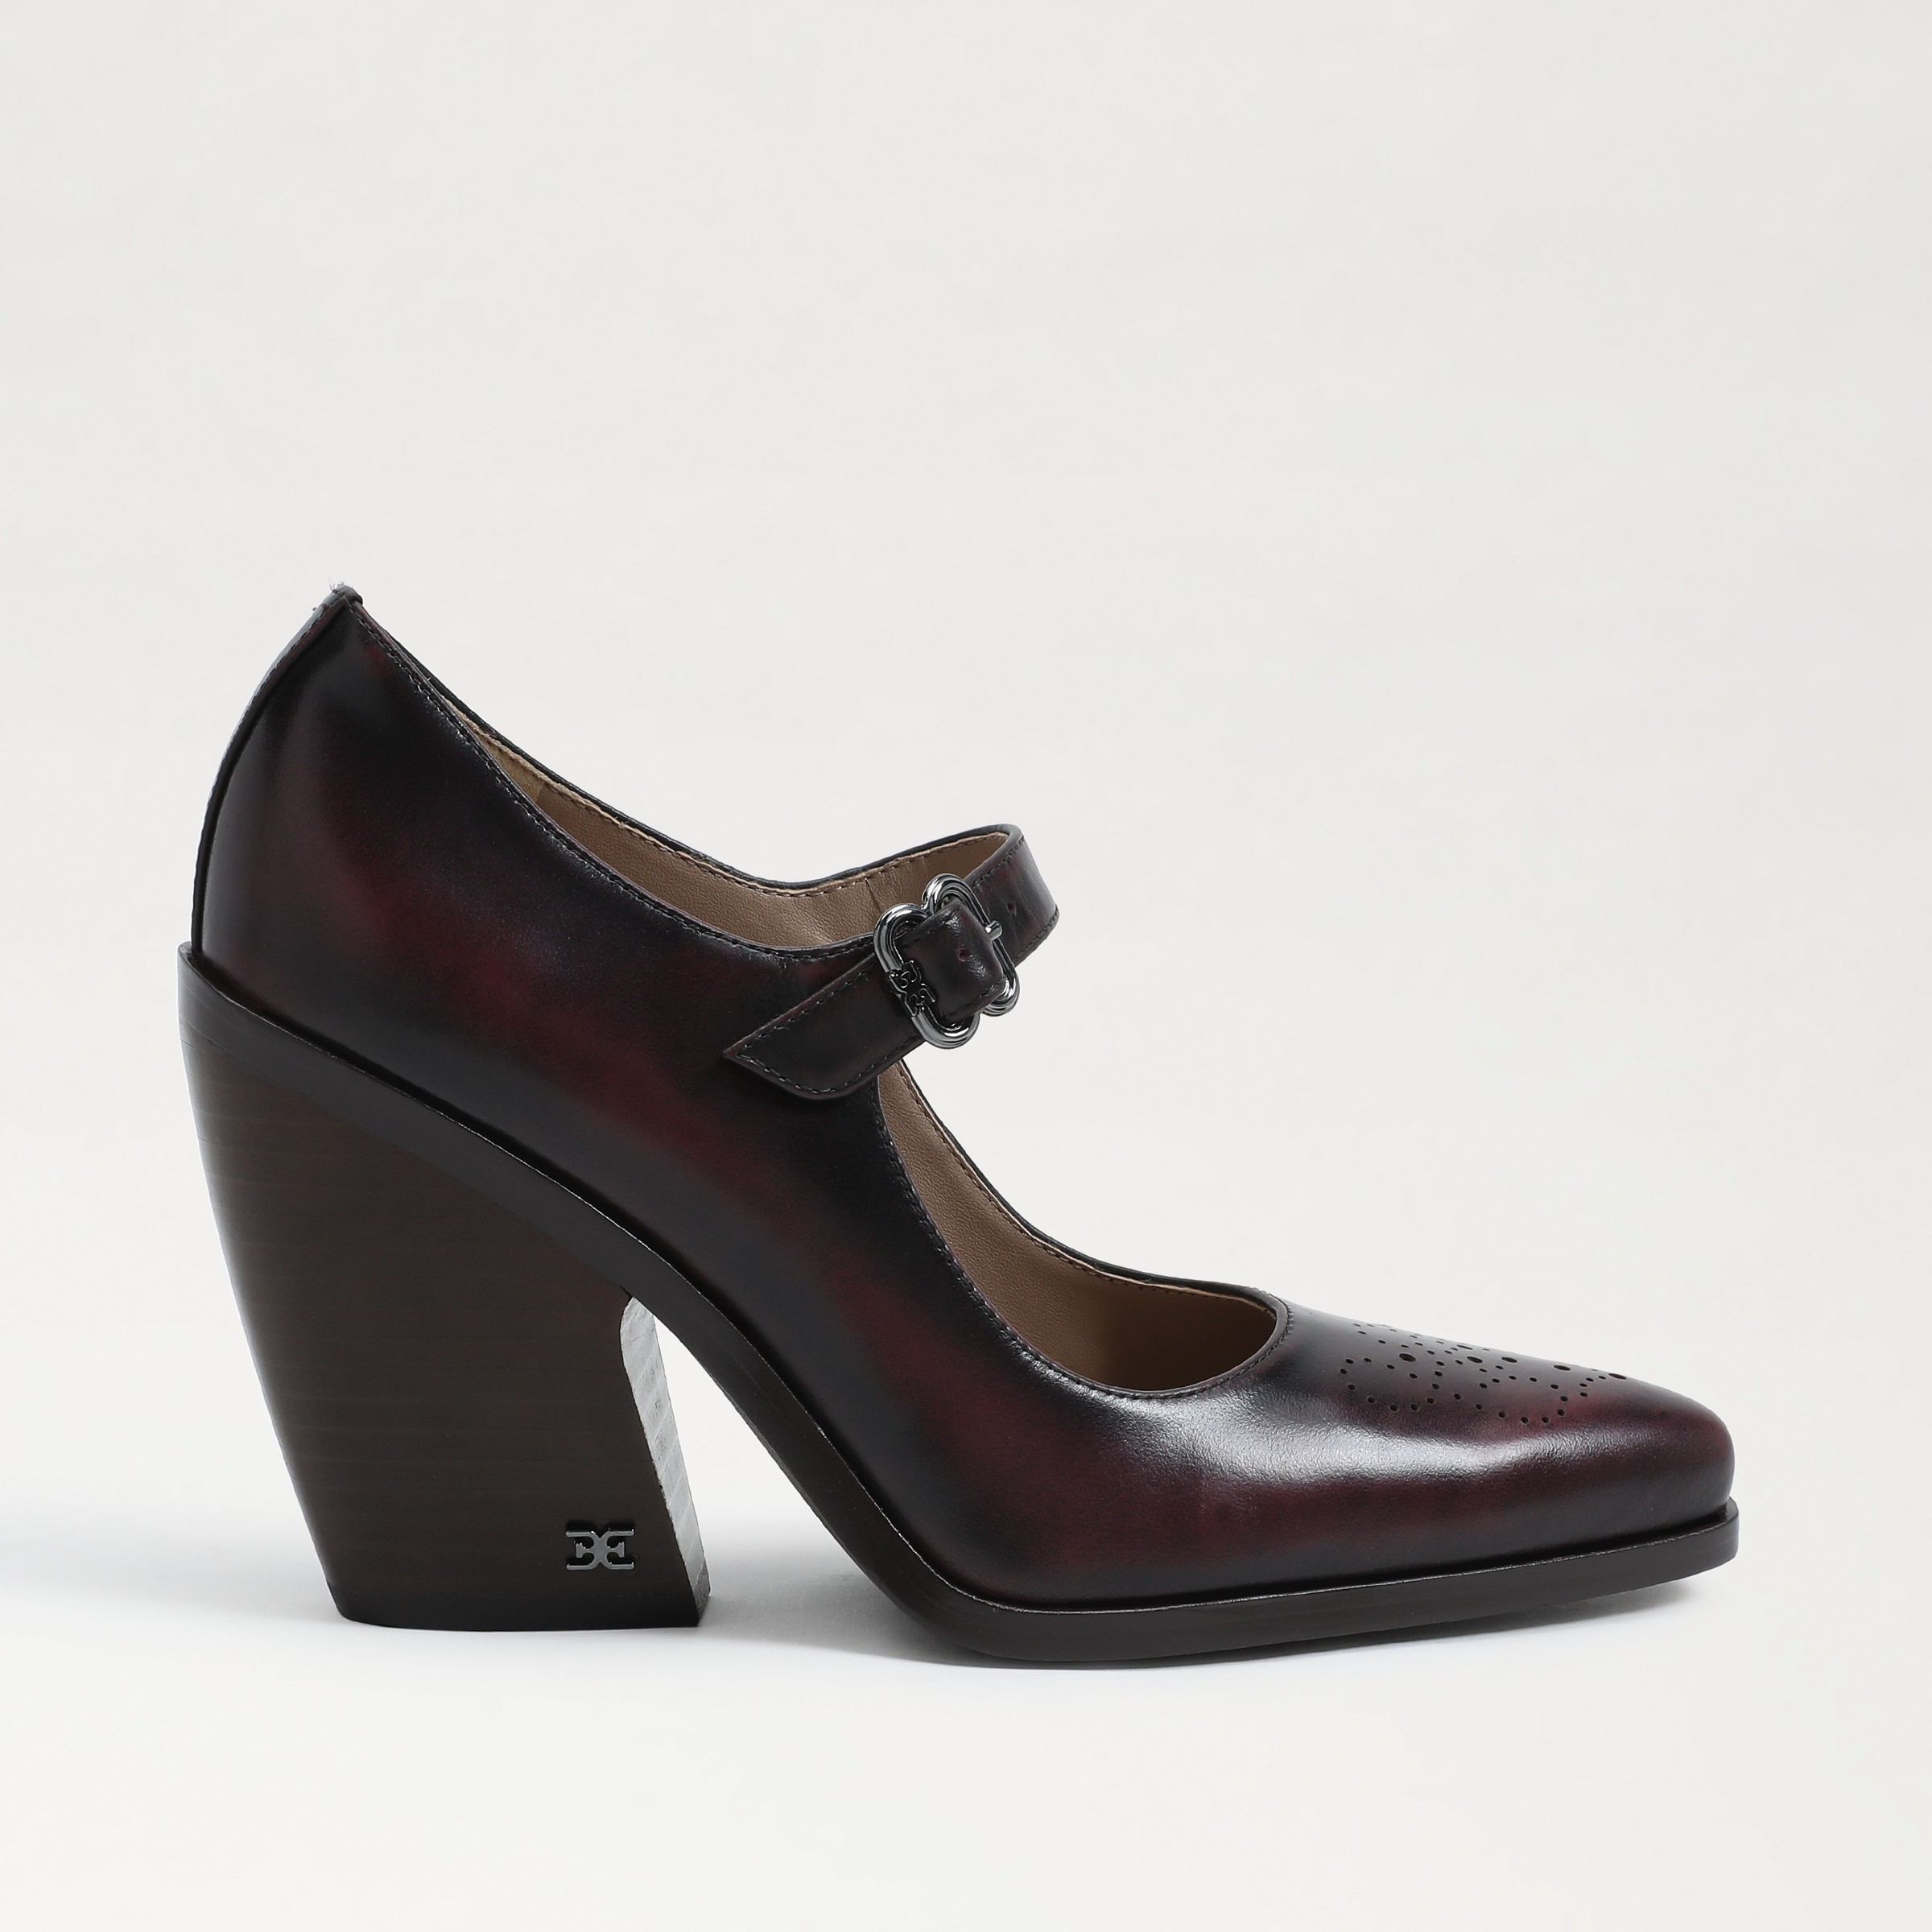 Valadon | Leather Mary Jane Heels | Moshulu